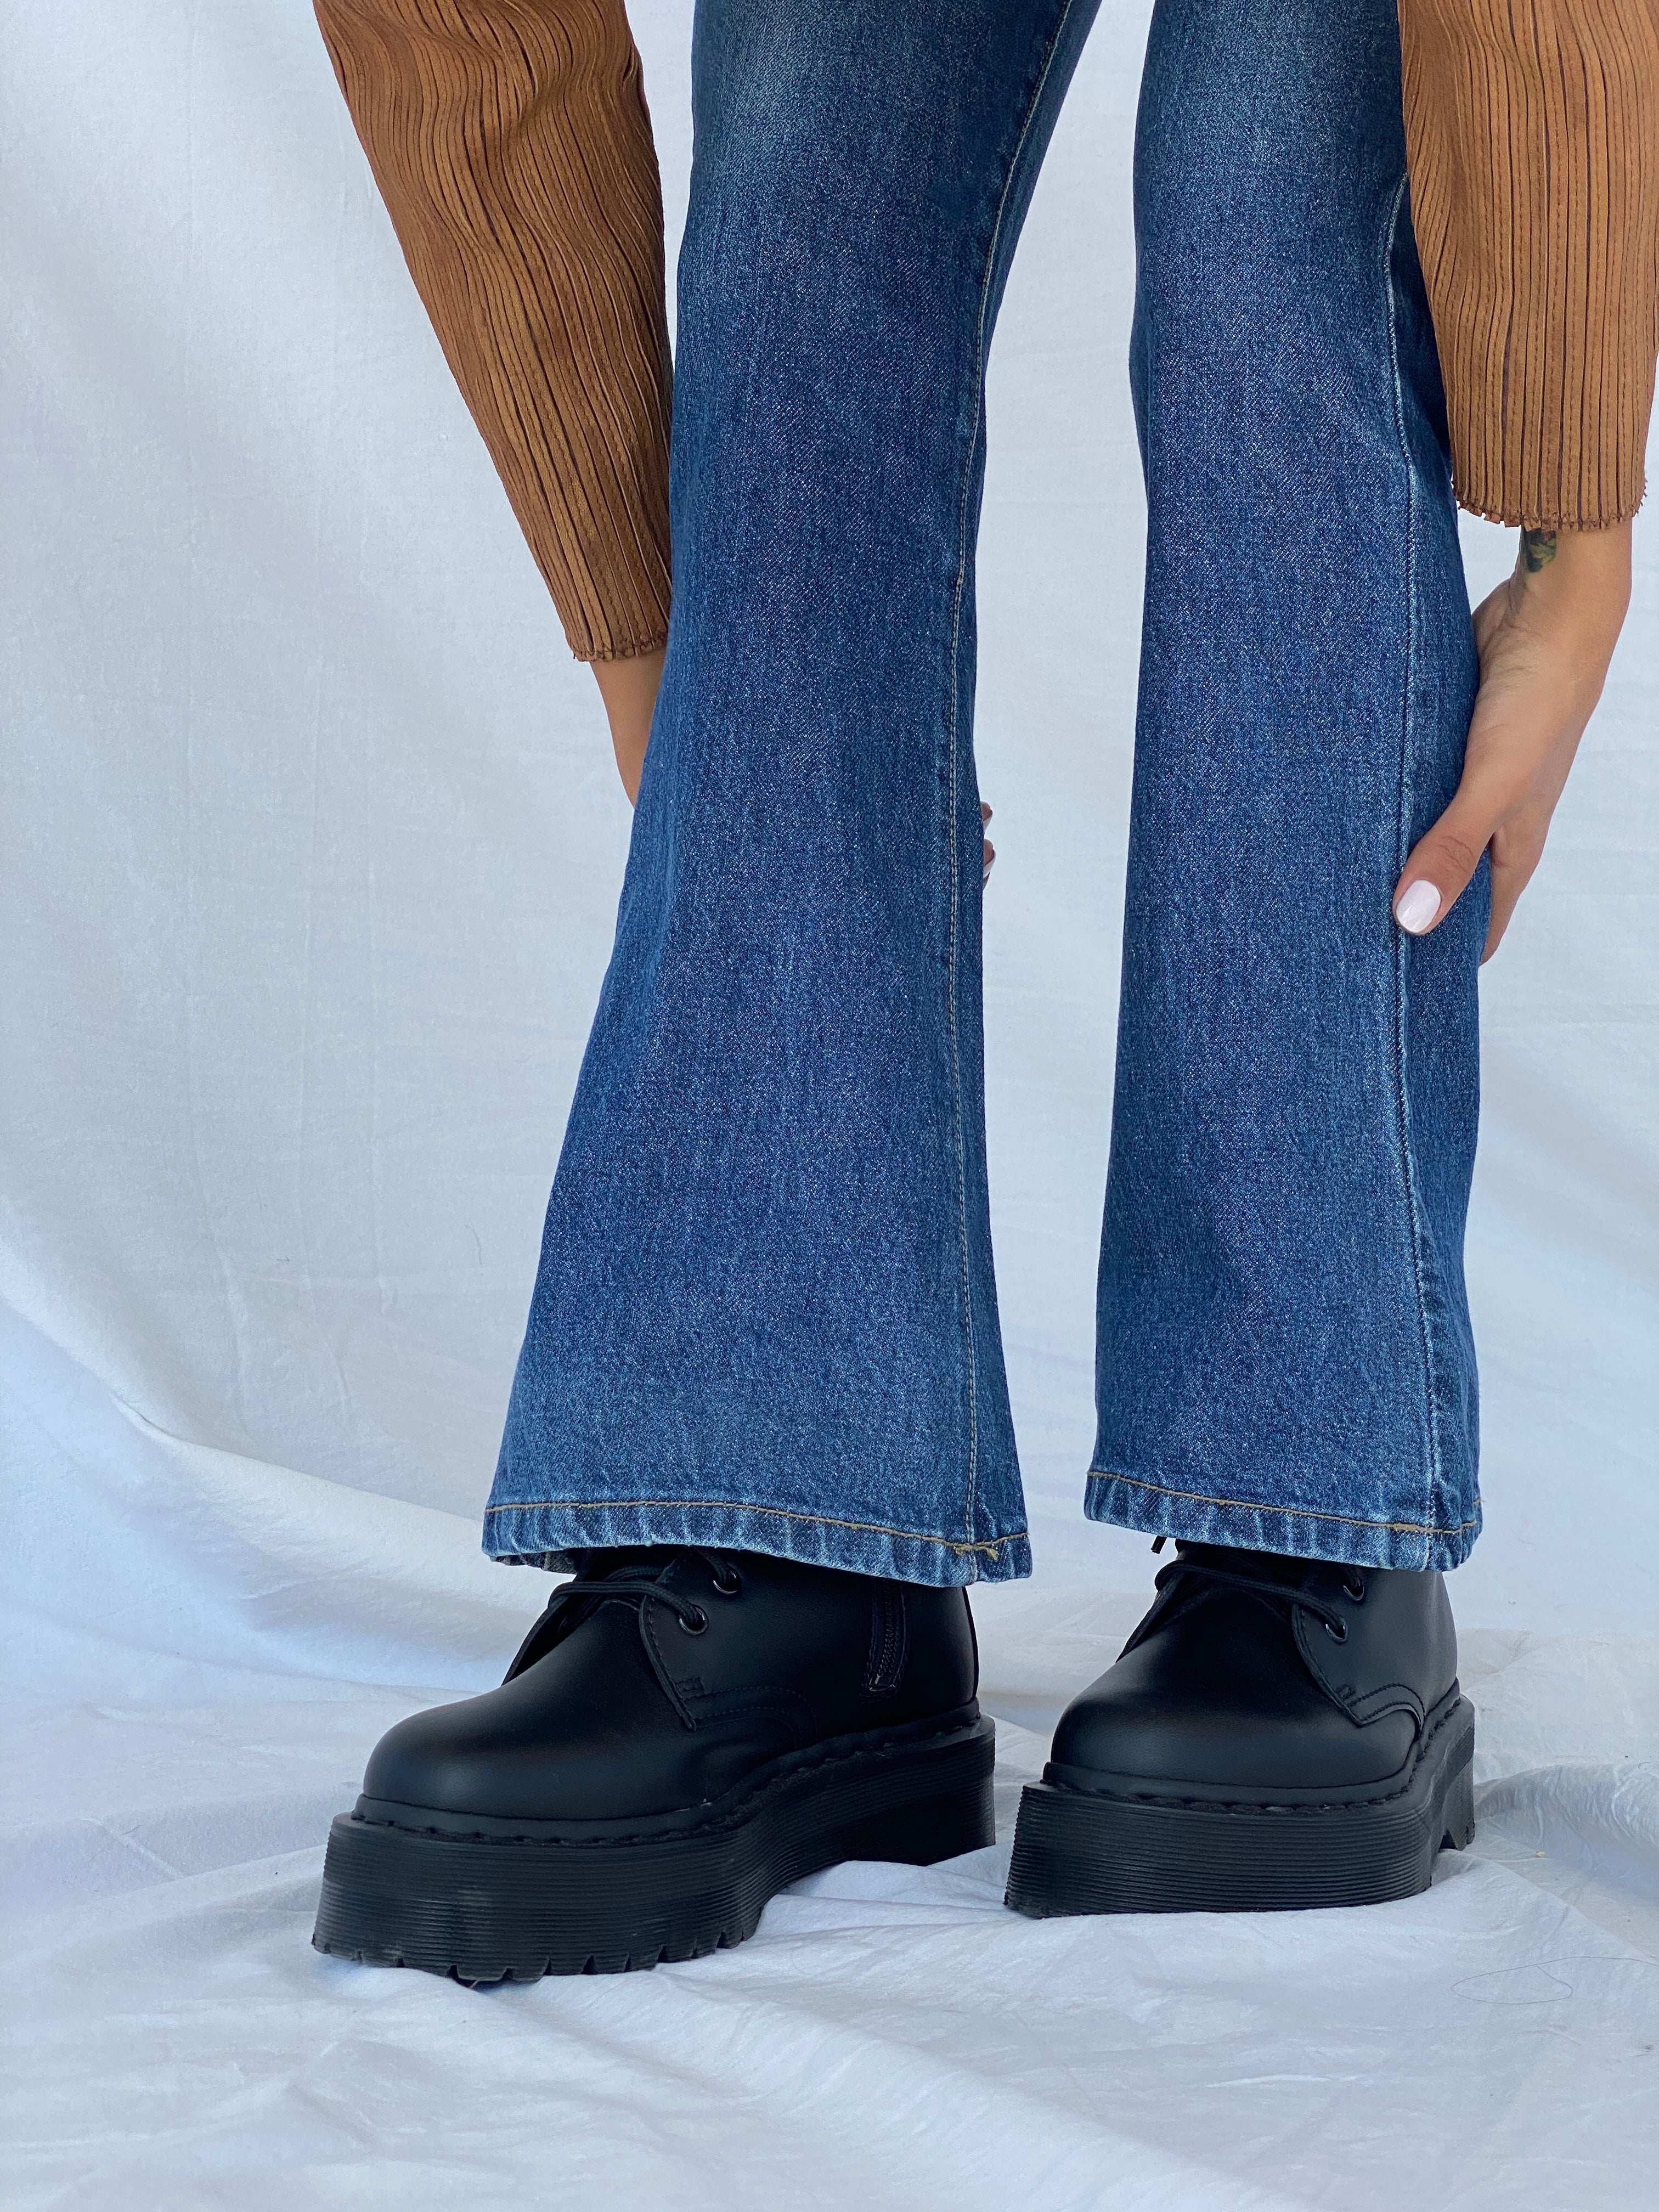 Vintage PMS.L Jeans Flare Jeans - Balagan Vintage Jeans 00s, 90s, flare jeans, Tojan